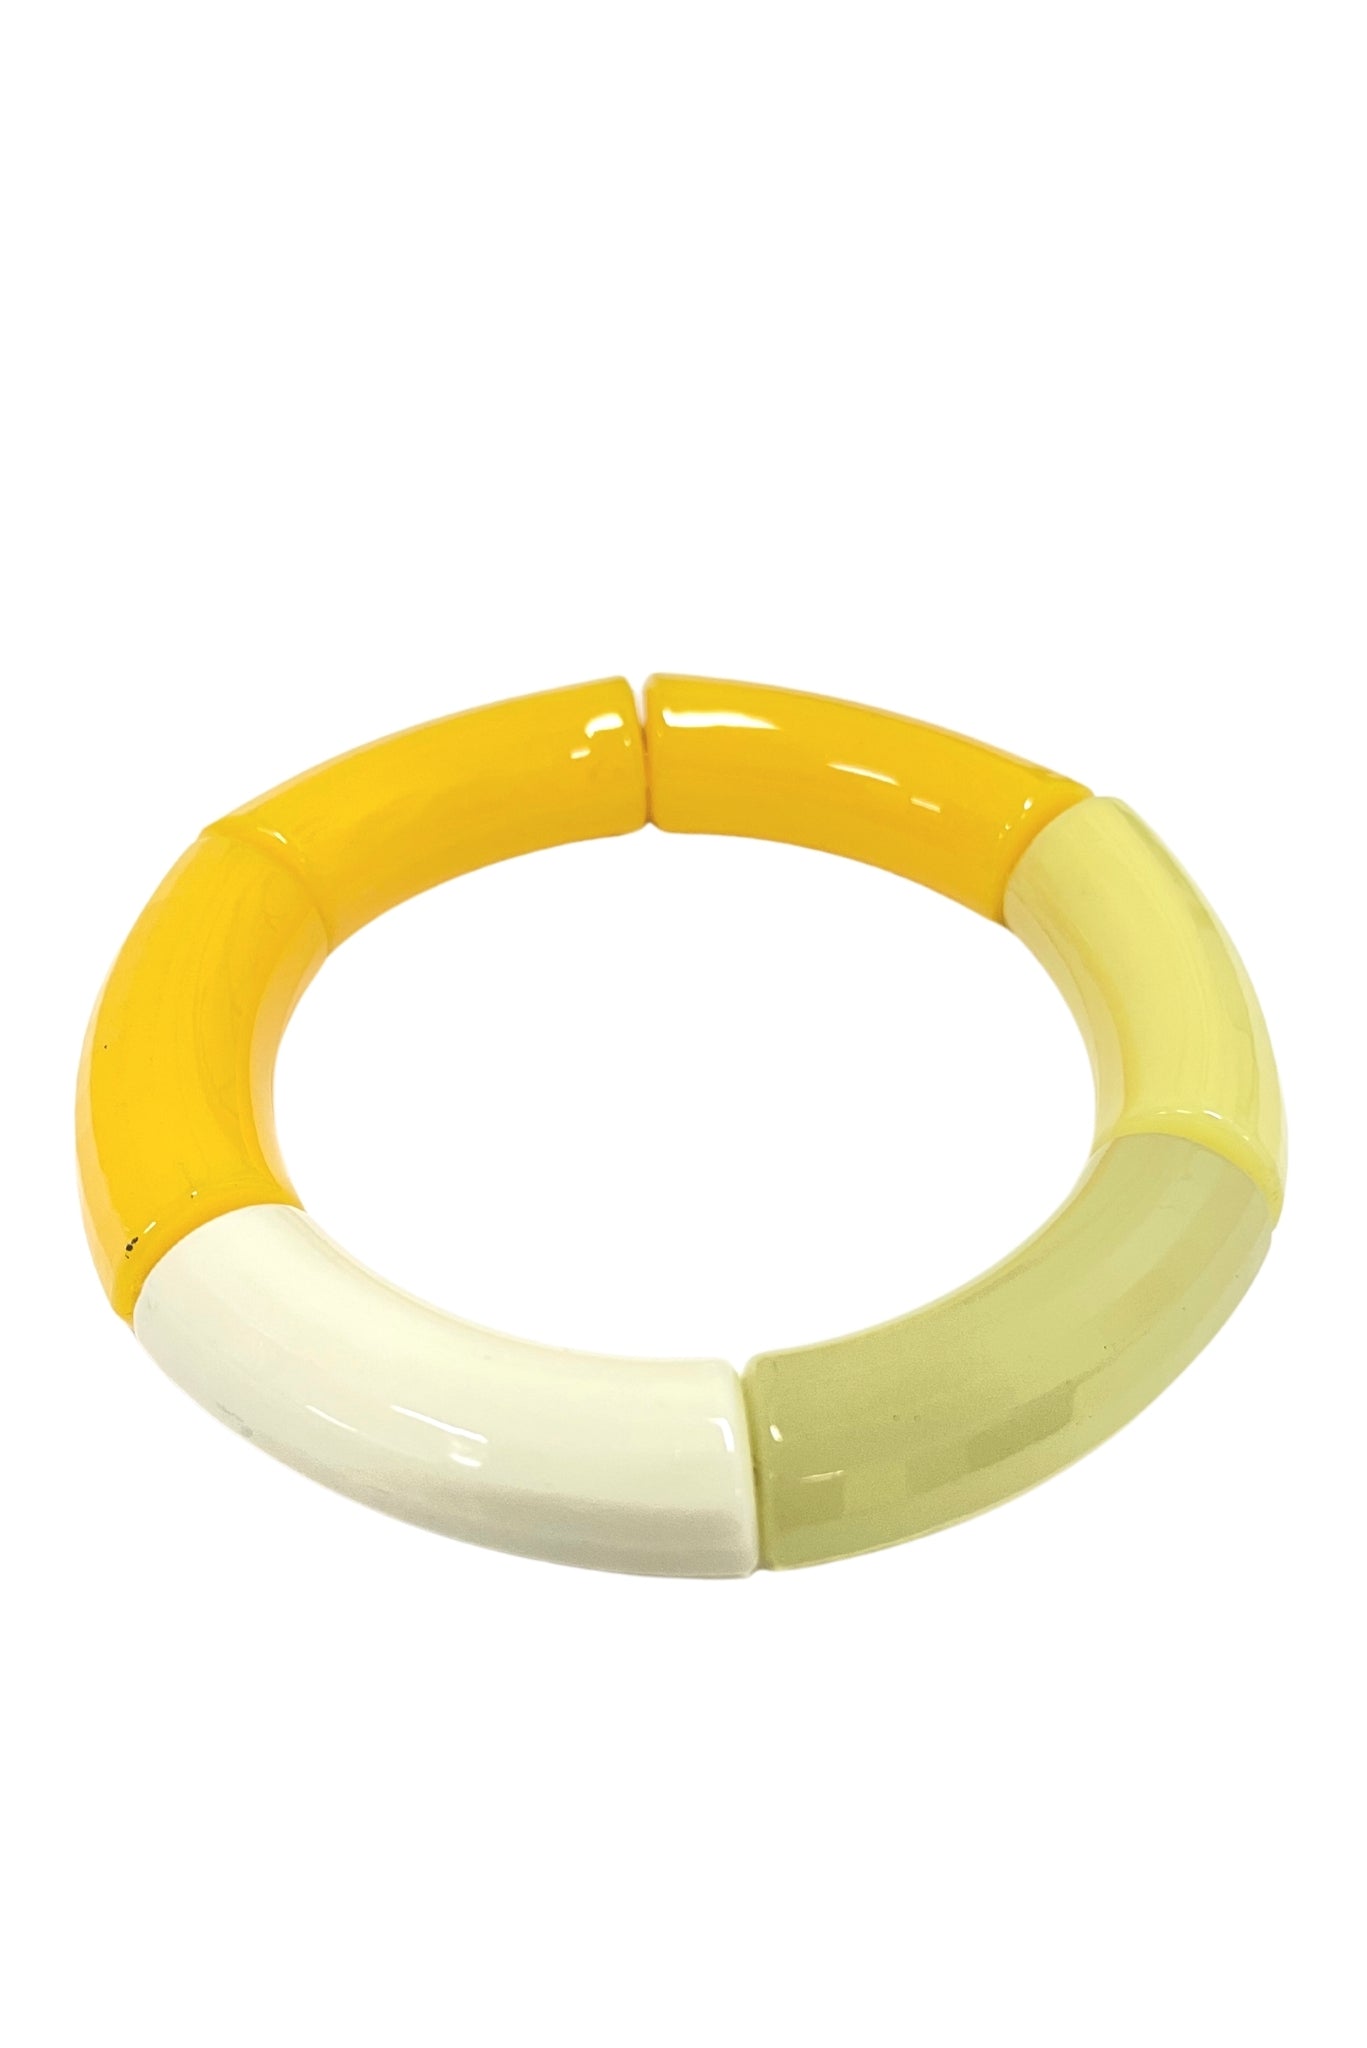 Yellow Acrylic Curved Beads Charm Bracelet*FINAL SALE*